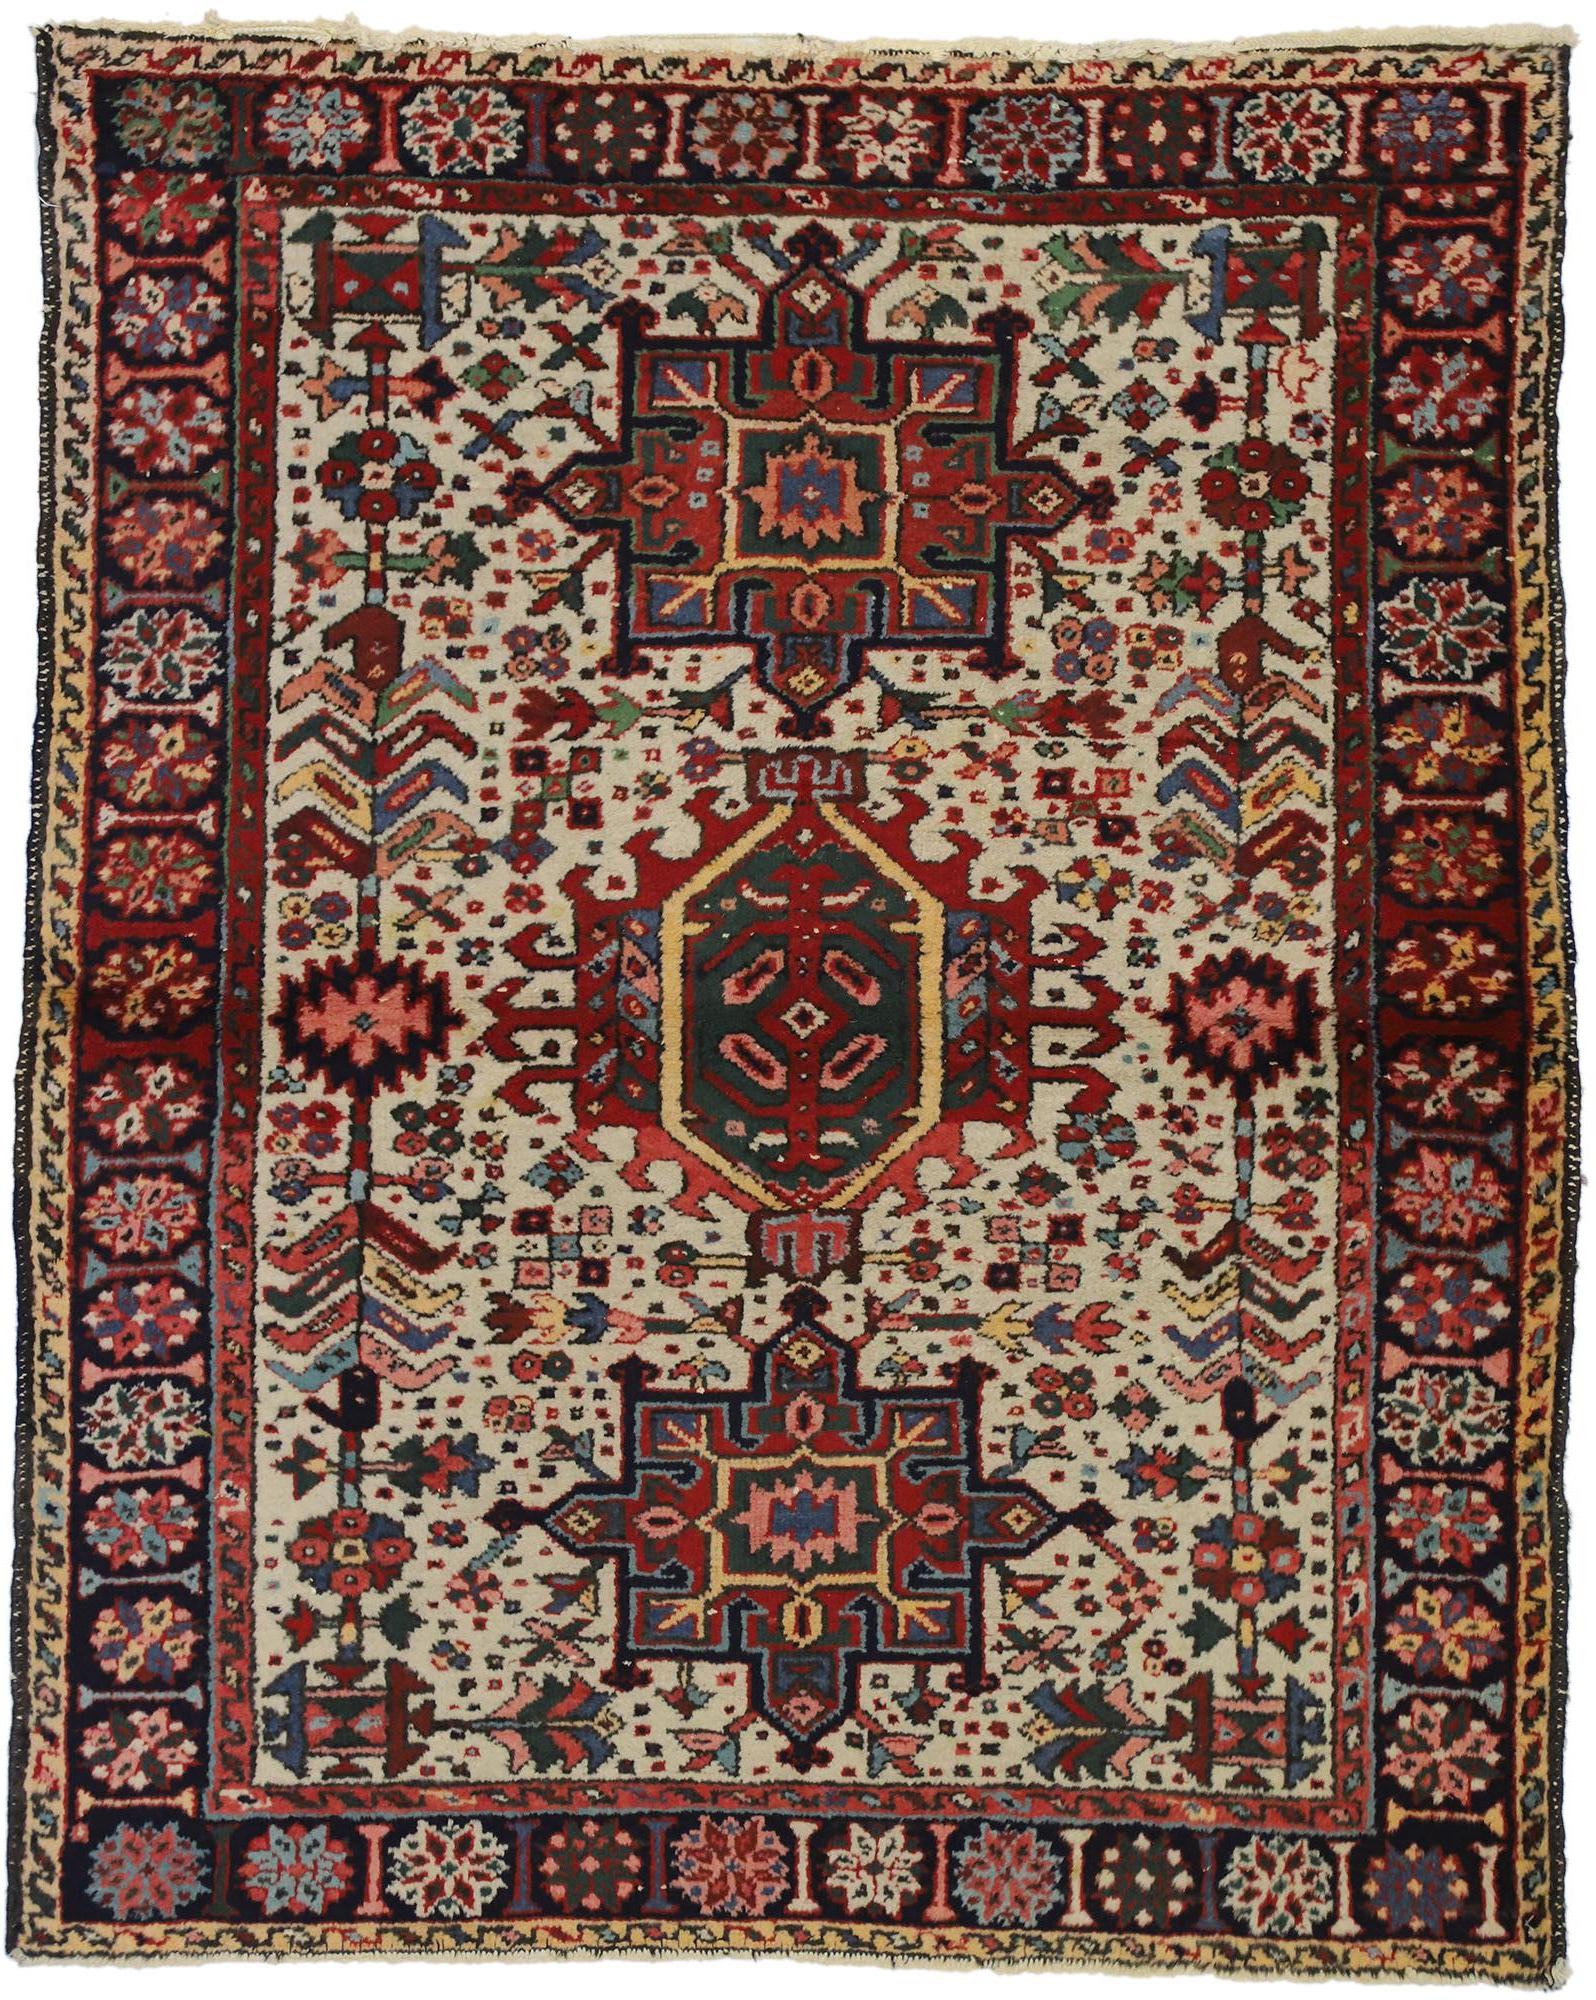 Tapis persan ancien Heriz Karaja avec style moderne du milieu du siècle, tapis d'appoint